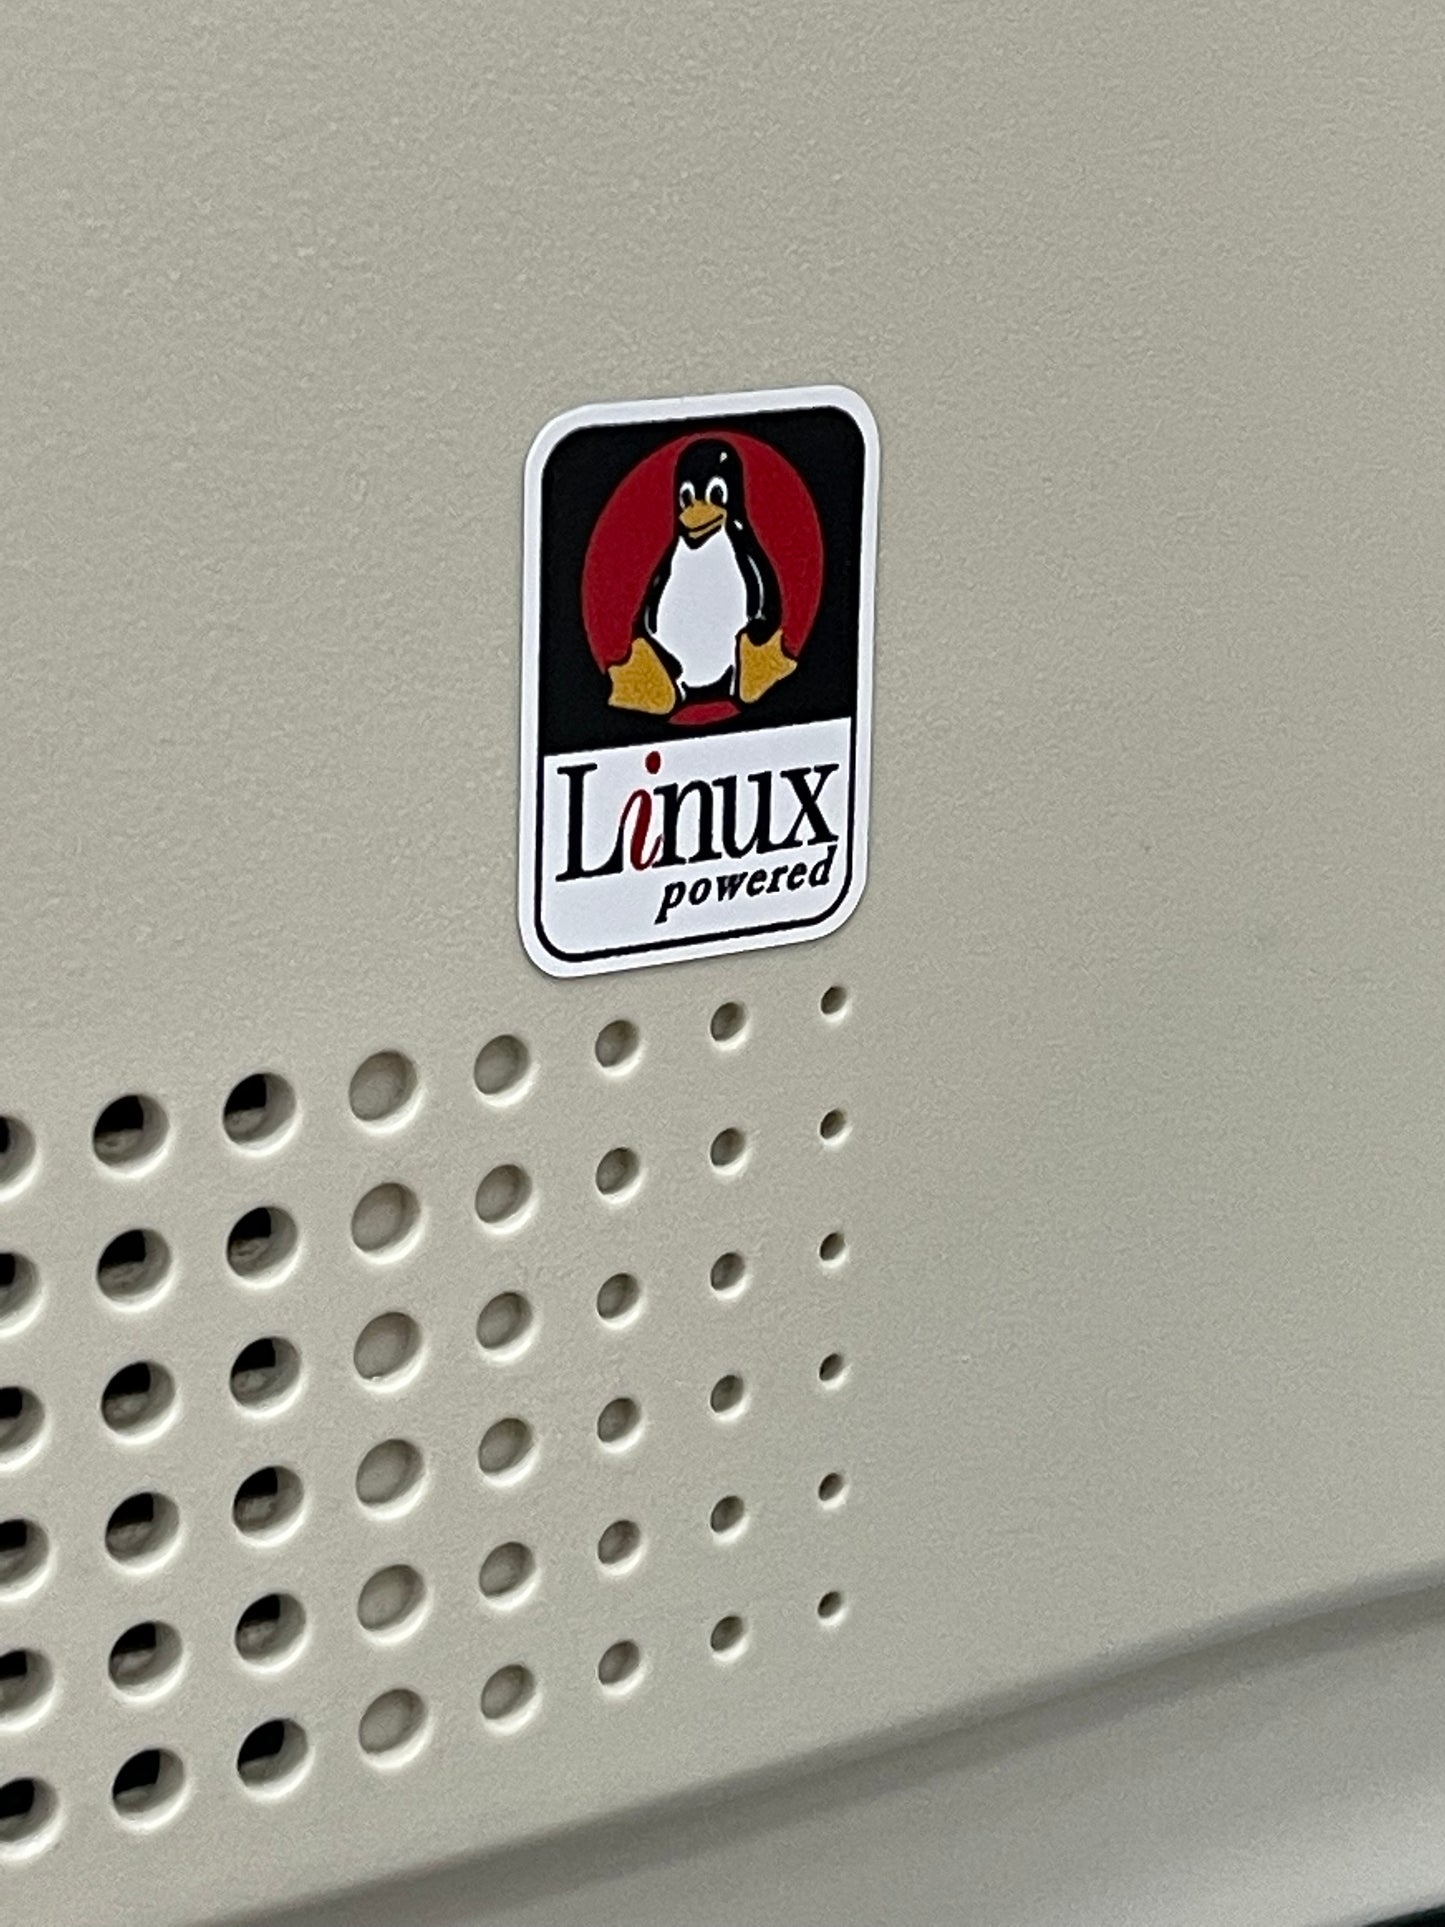 Linux Powered Color Penguin Logo Case Badge Sticker - White